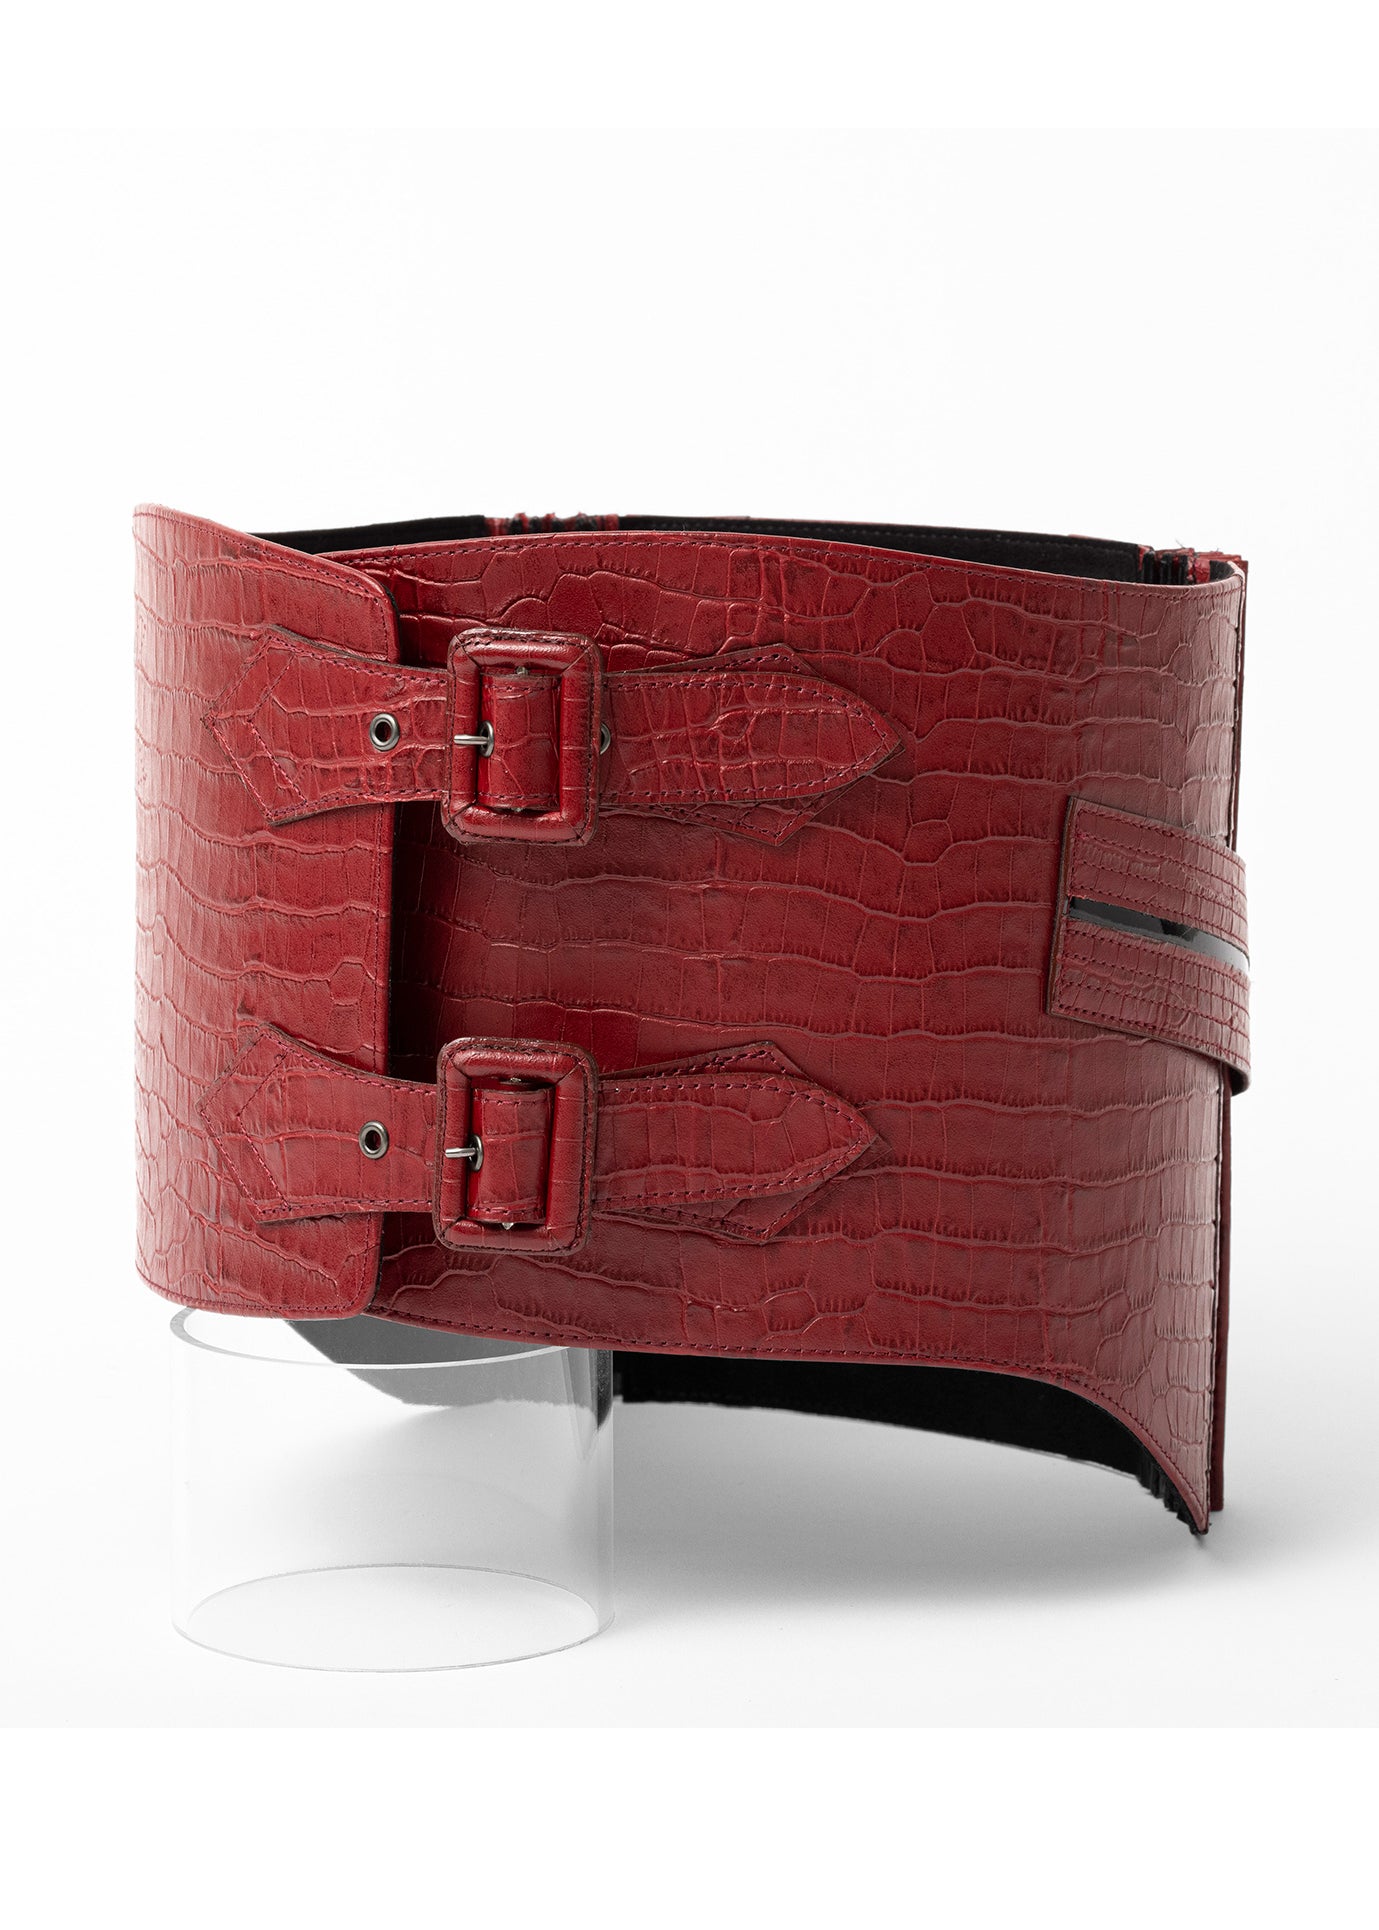 Obi belt "Croc red" leather